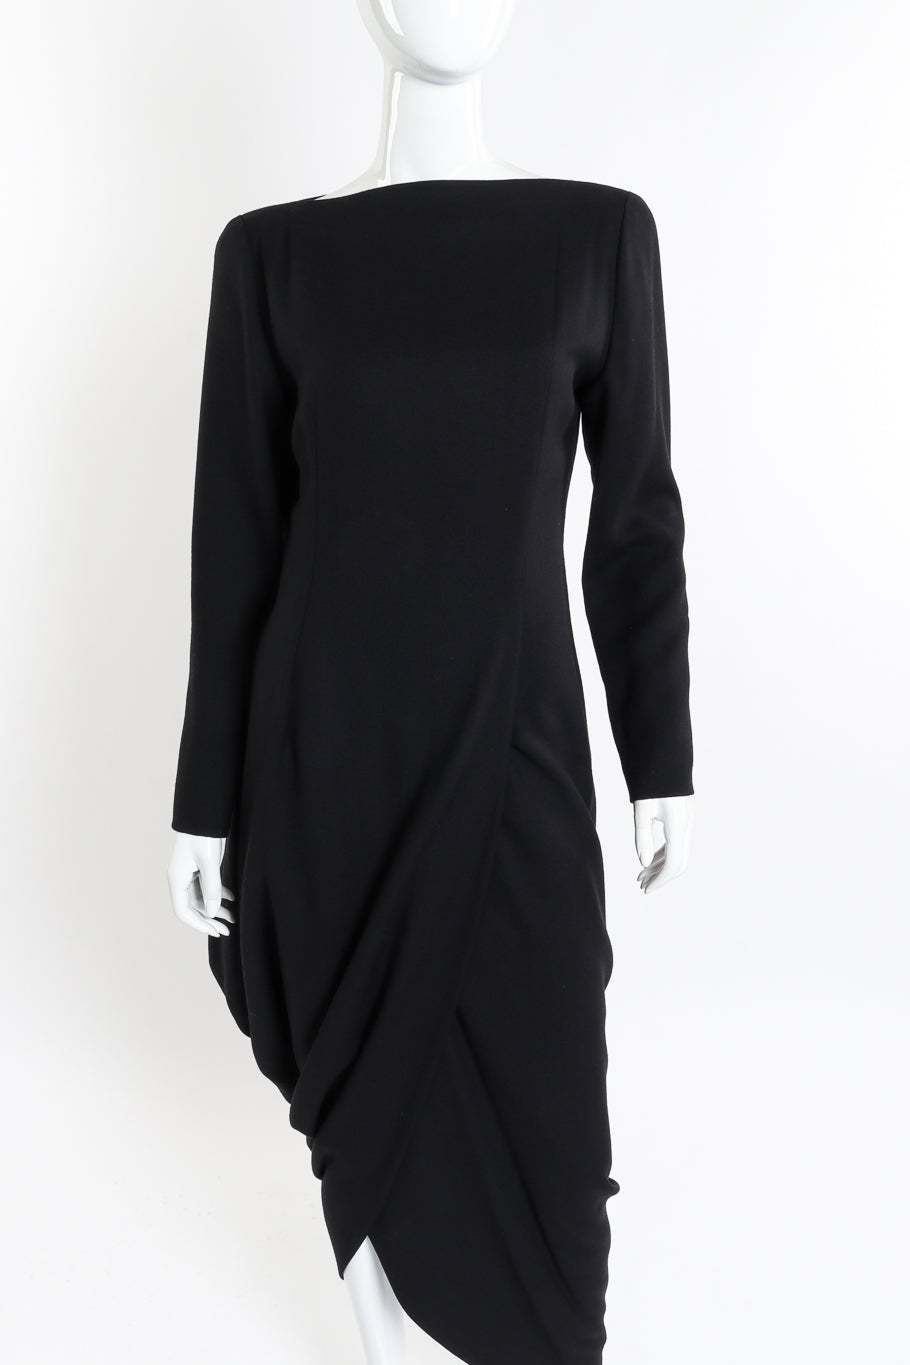 Vintage Givenchy Asymmetrical Hem Dress front on mannequin closeup @recessla